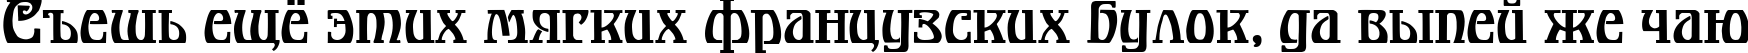 Пример написания шрифтом Bonapart-Modern текста на русском